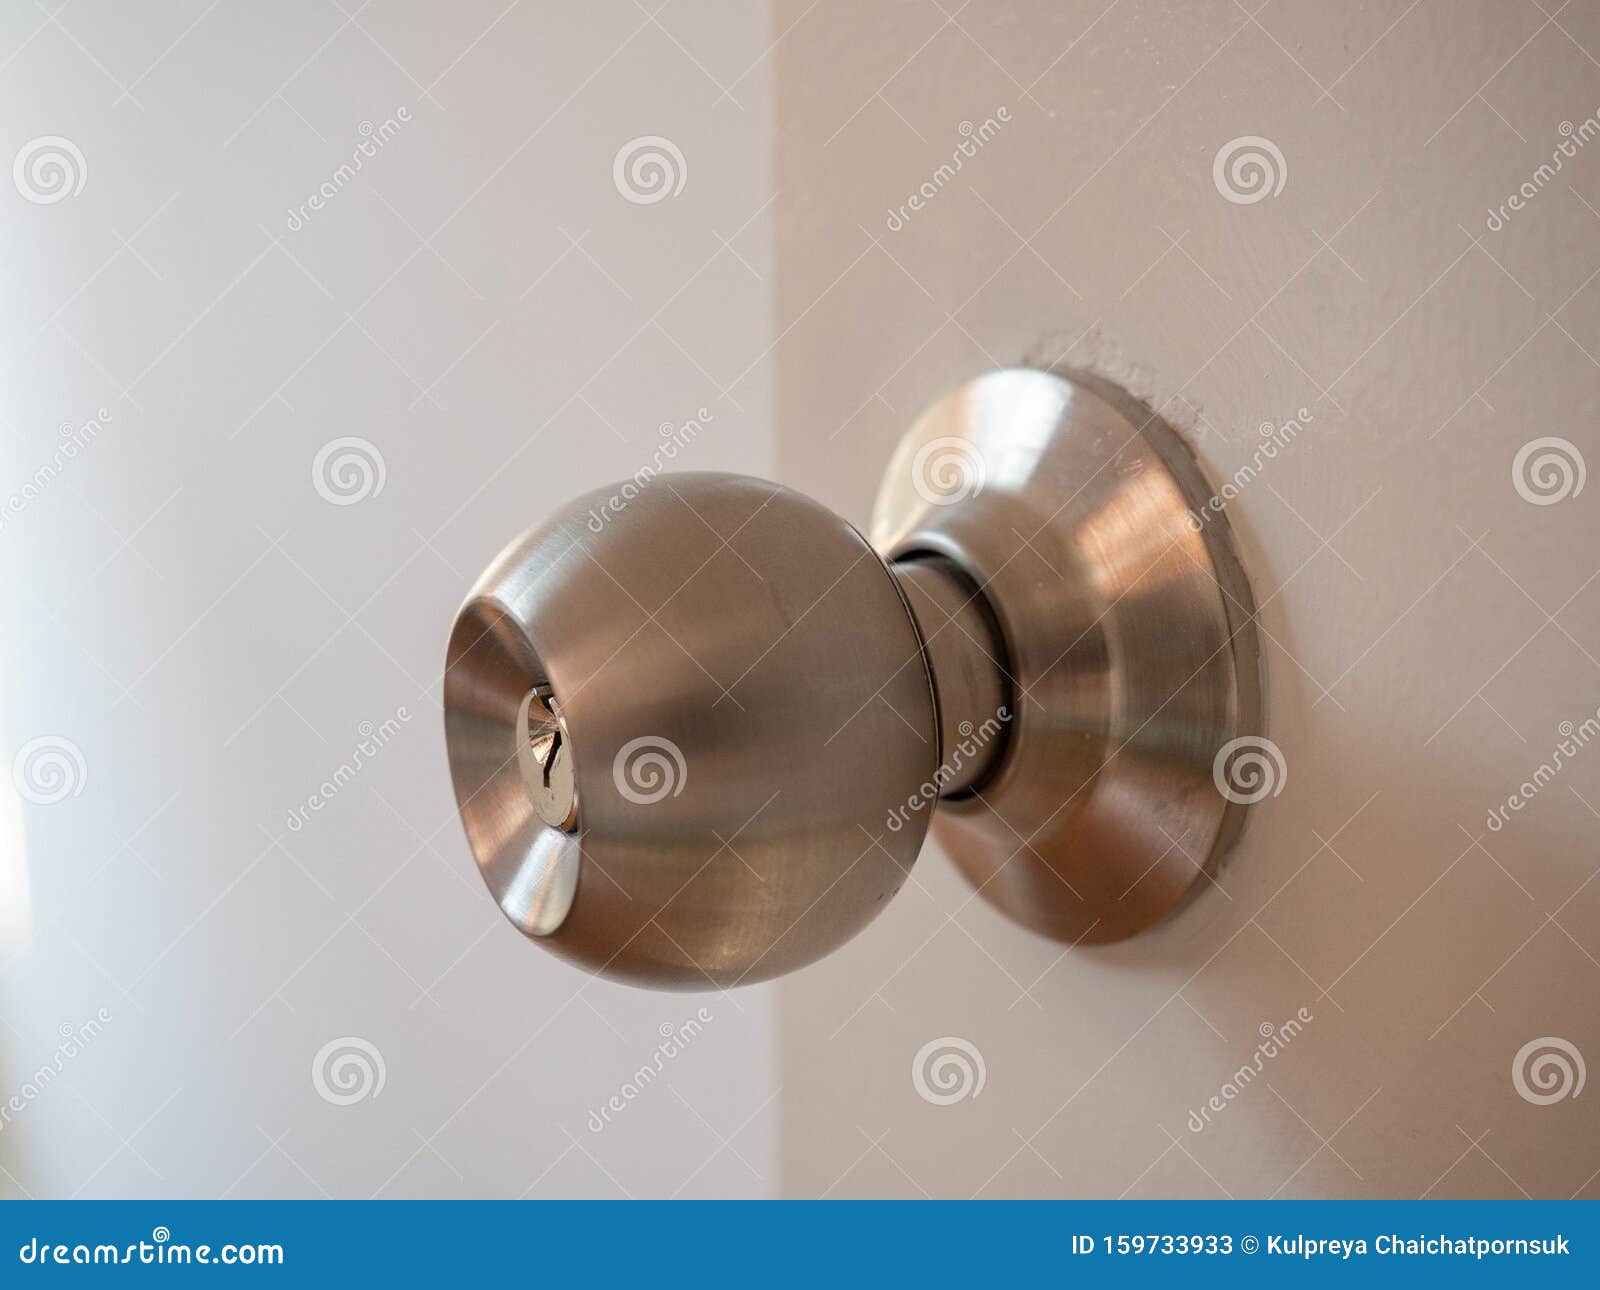 door knob,on wood white door,material stainless,beautiful lighting,sunlight,security lock,closeup detail